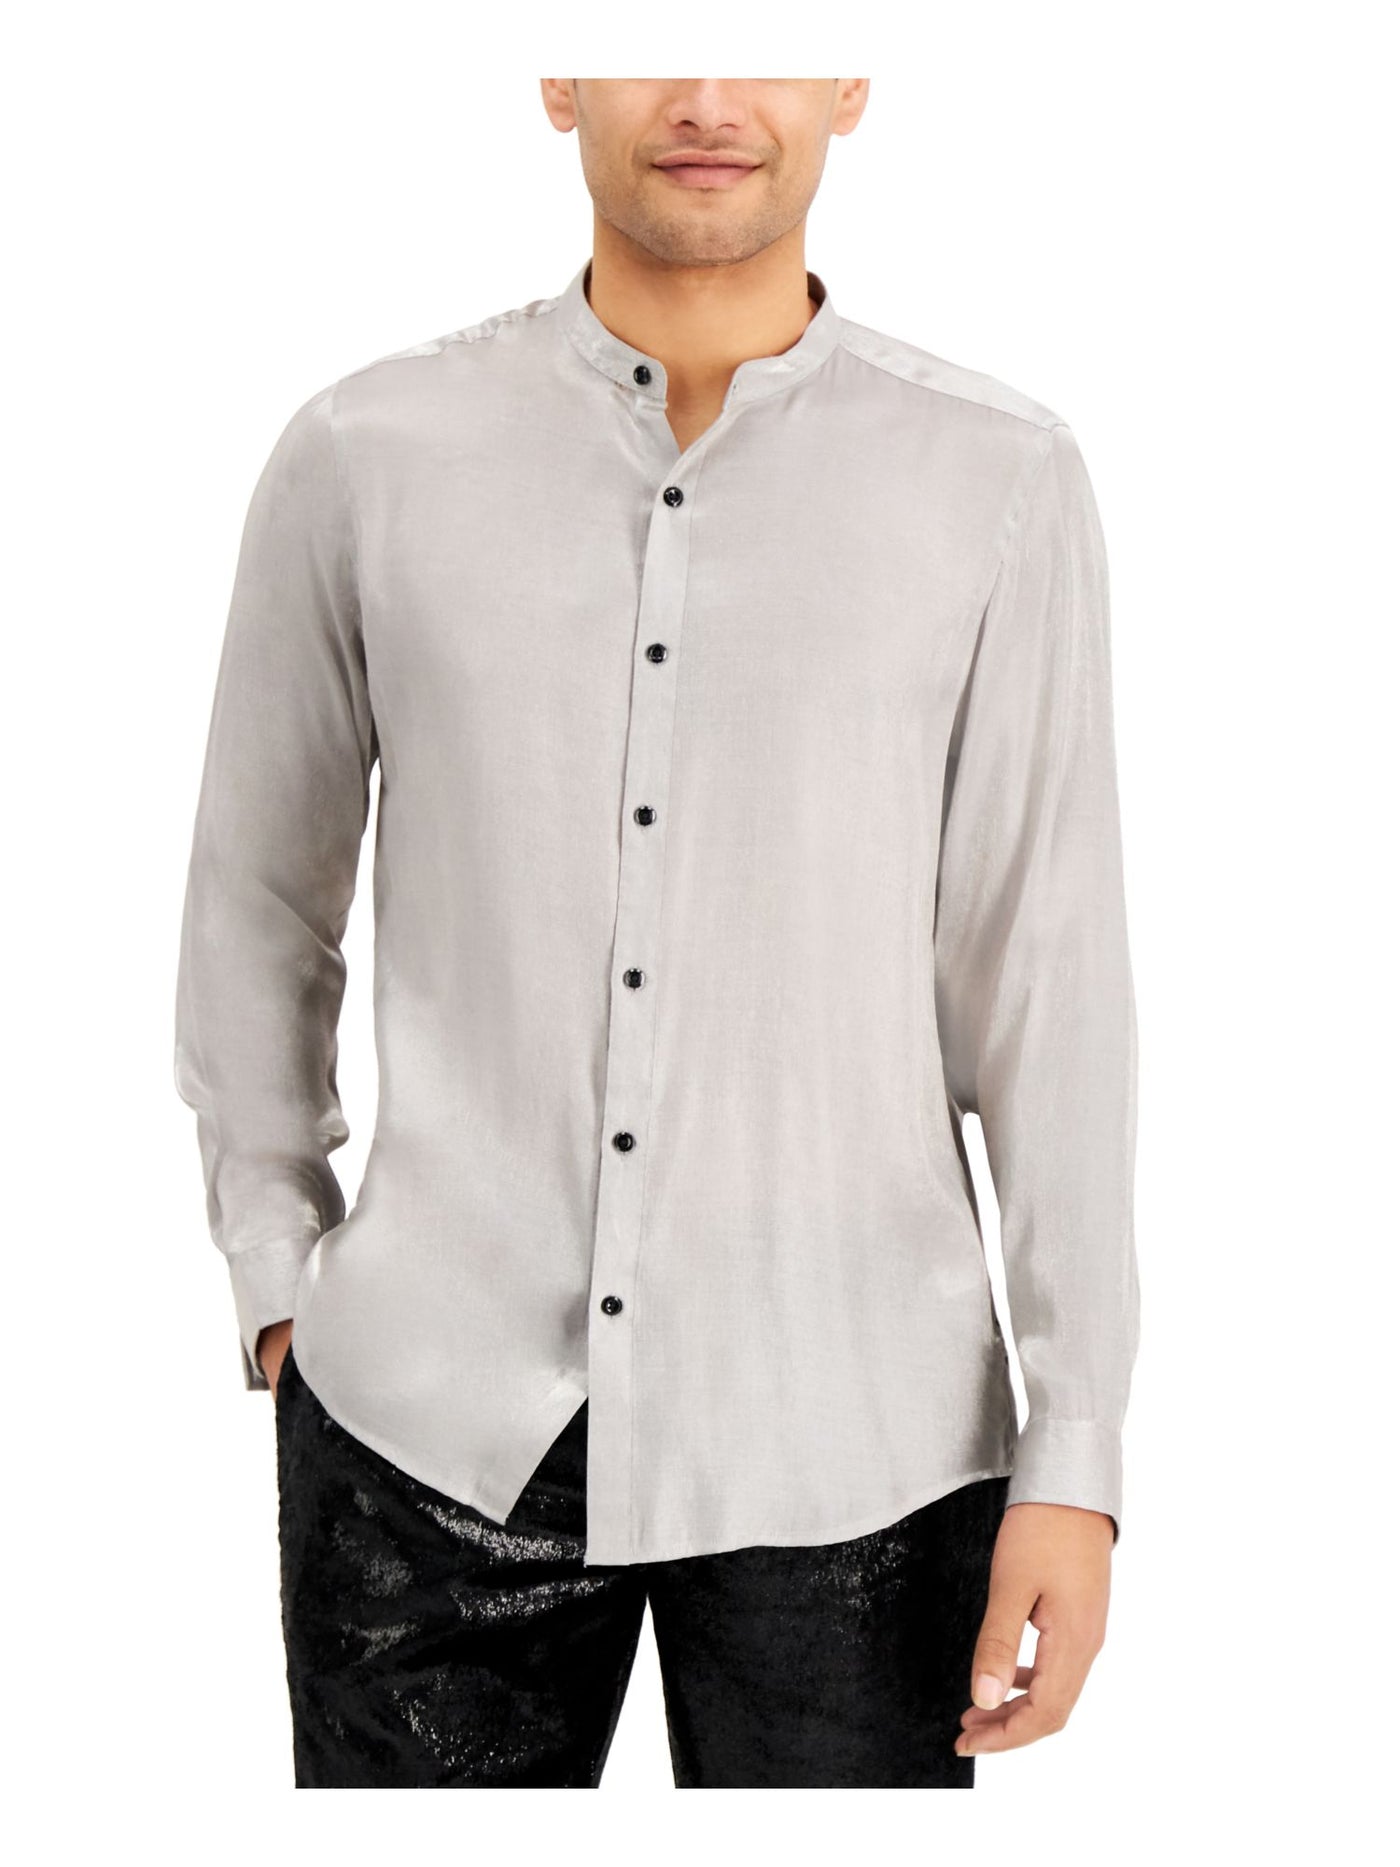 INC Mens Gray Classic Fit Button Down Casual Shirt XL